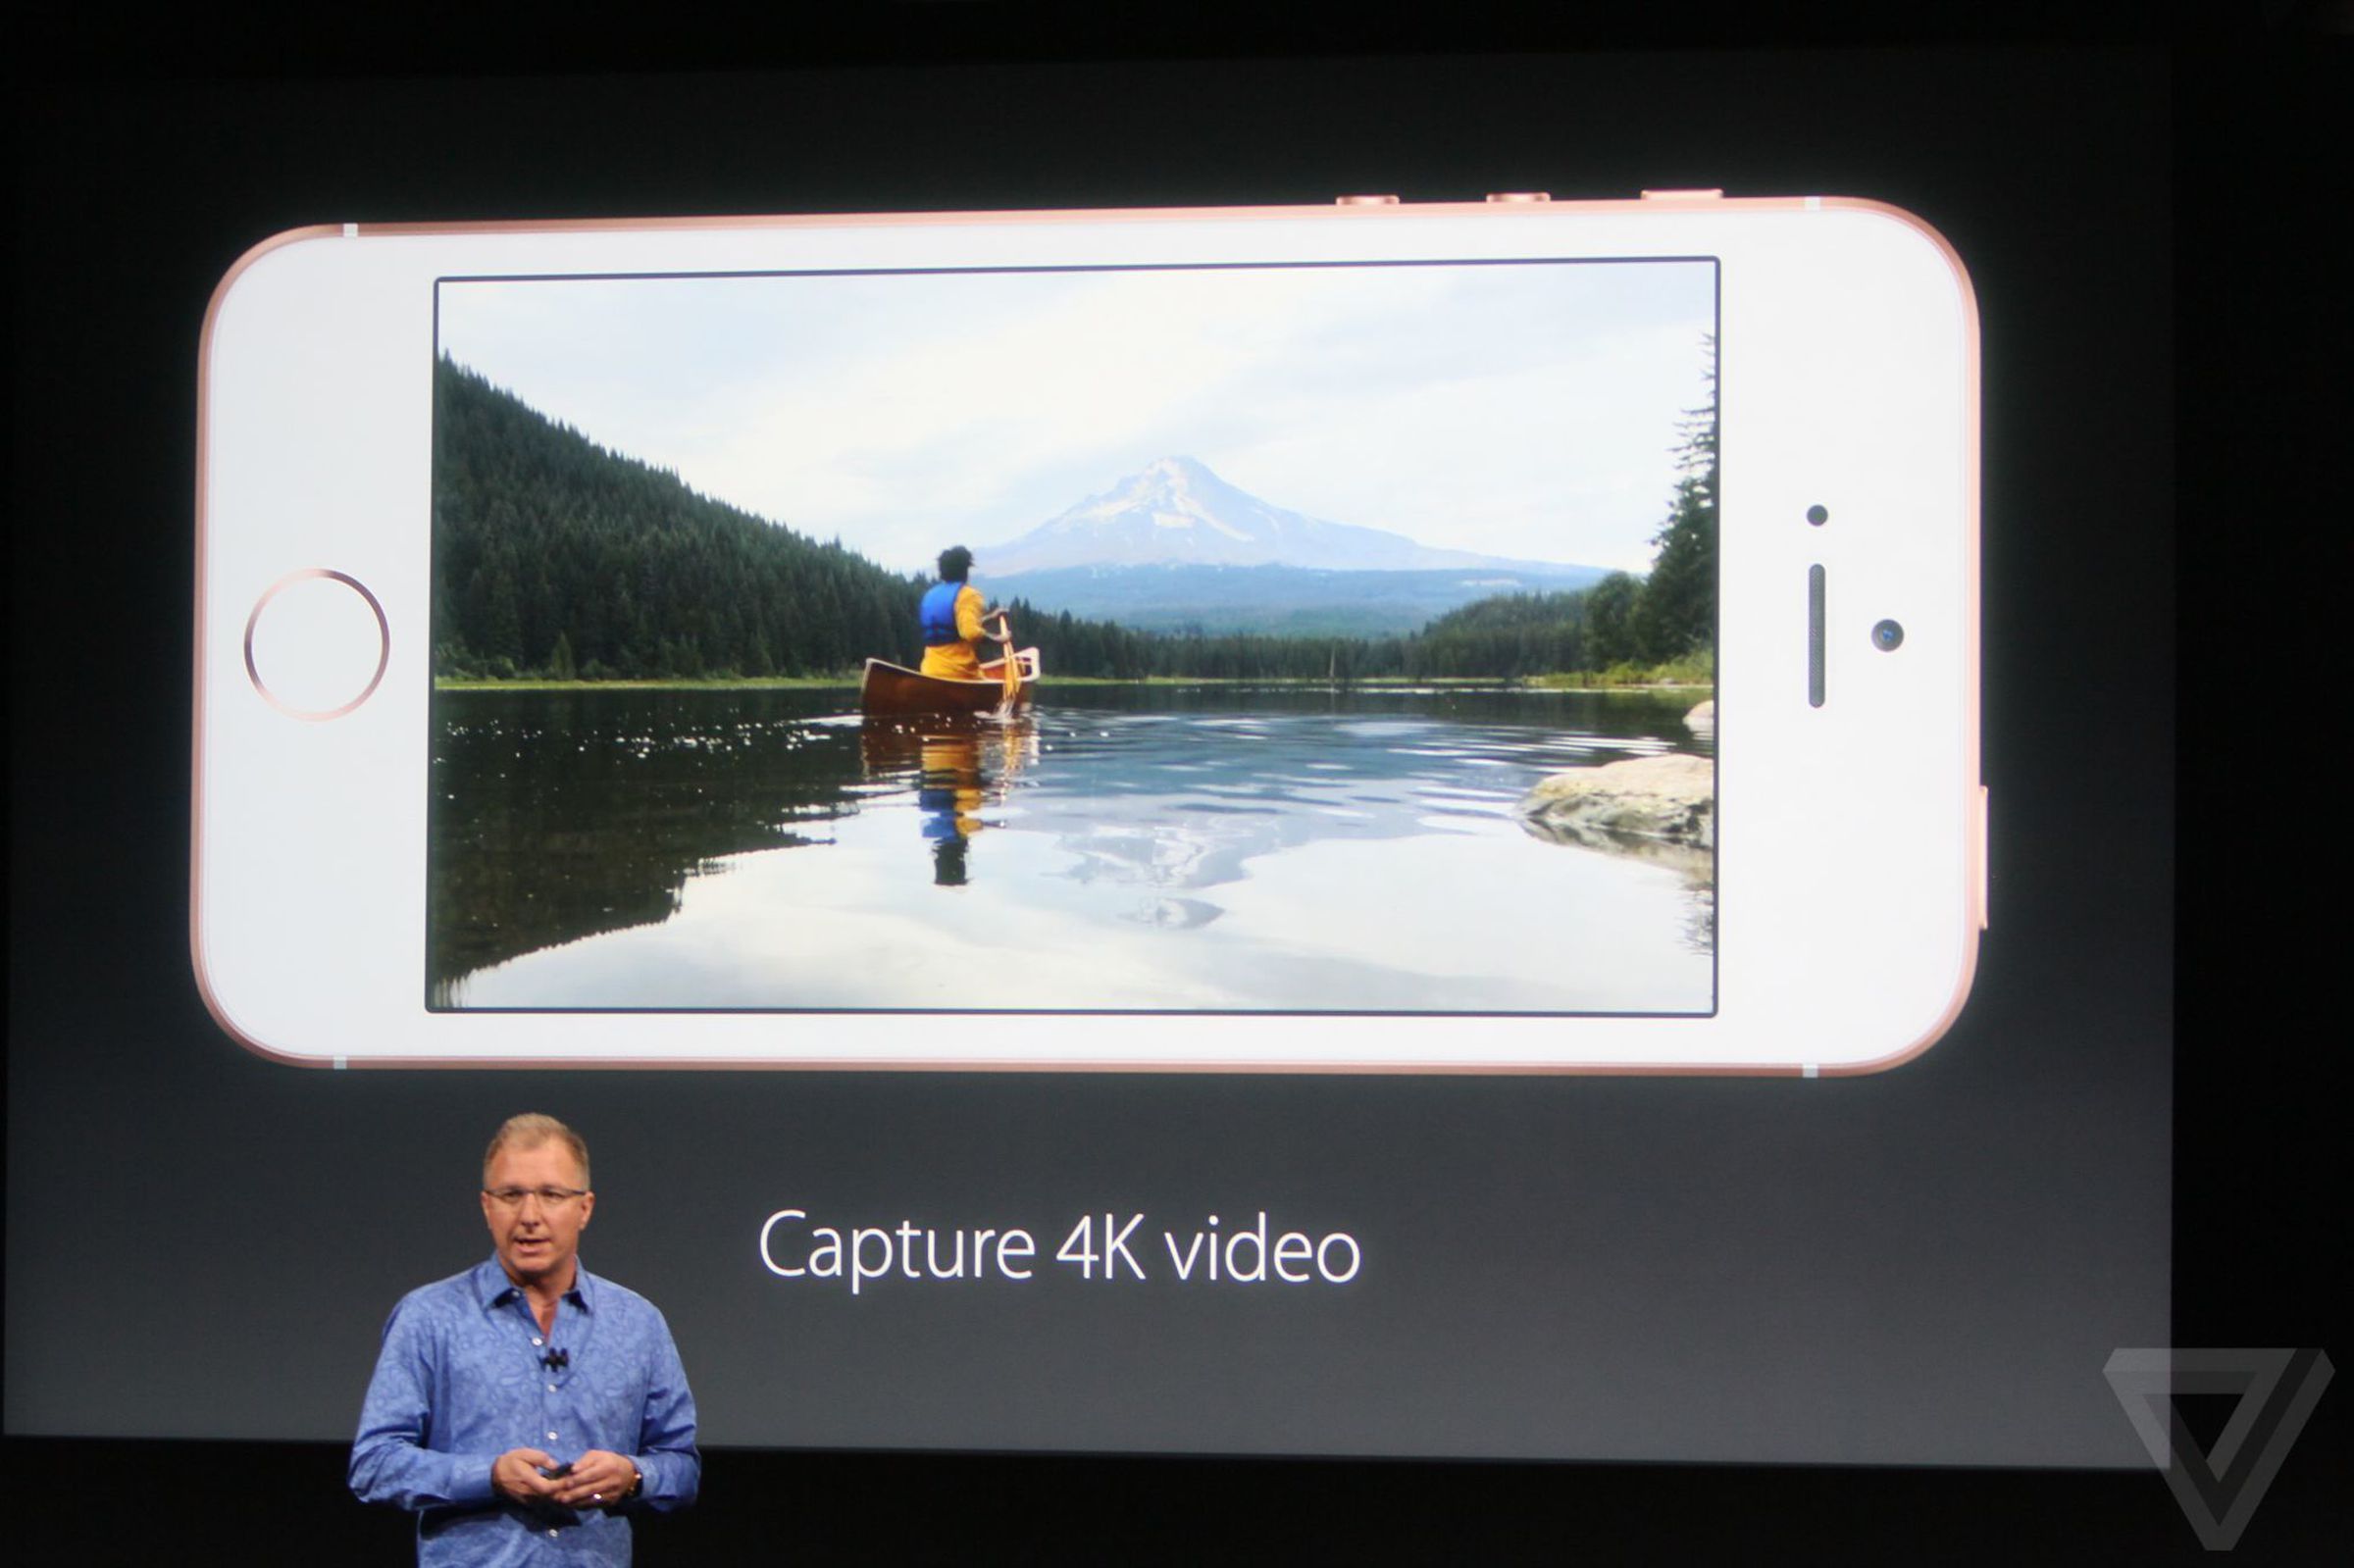 Apple iPhone SE announcement photos